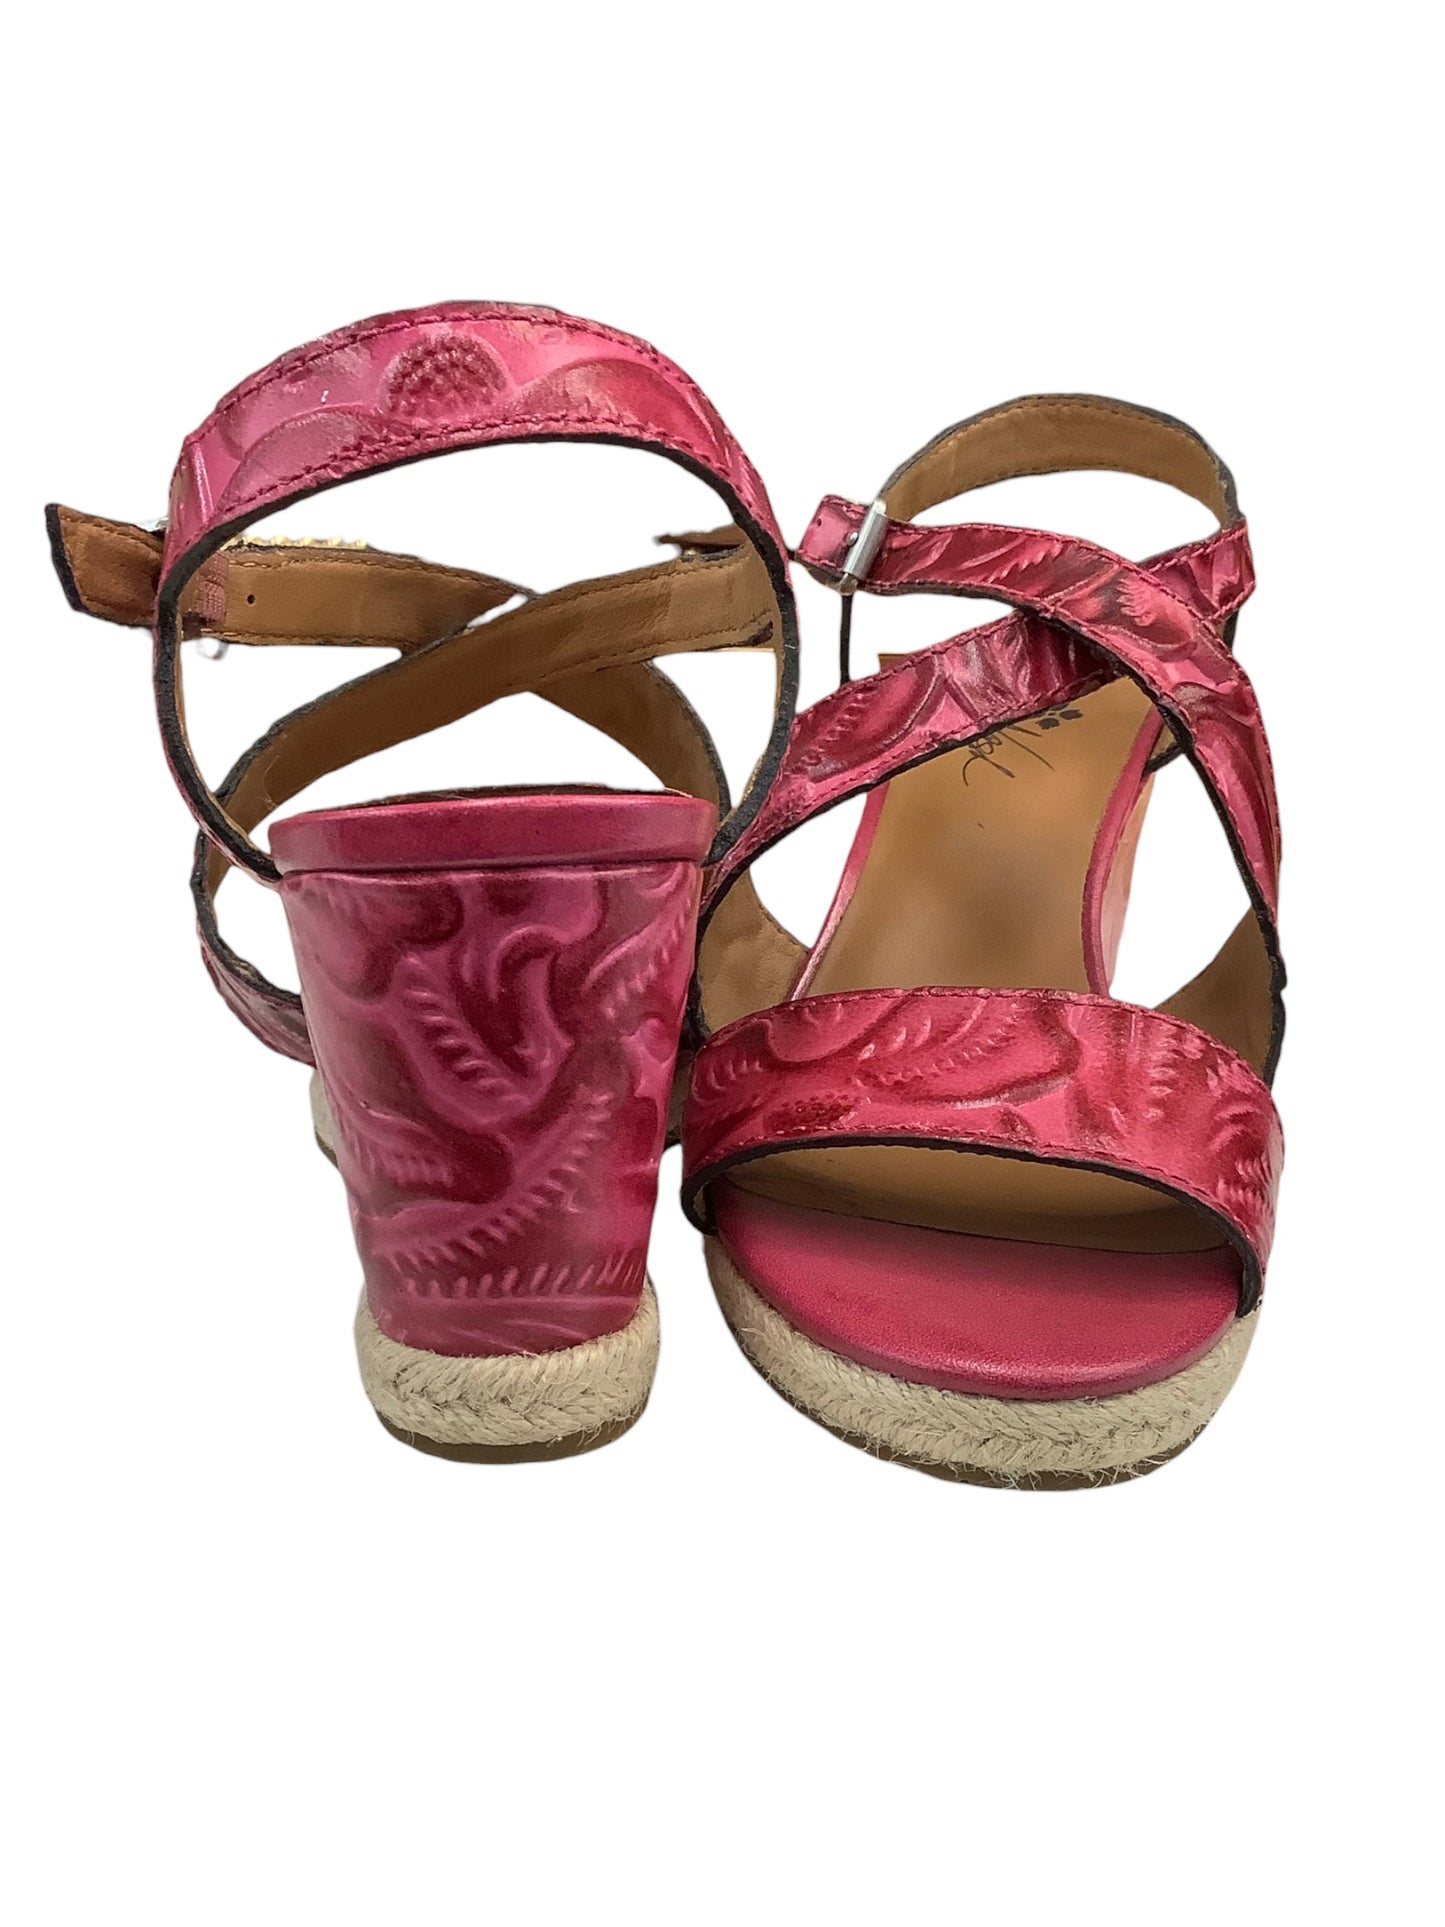 Sandals Designer By Patricia Nash  Size: 9